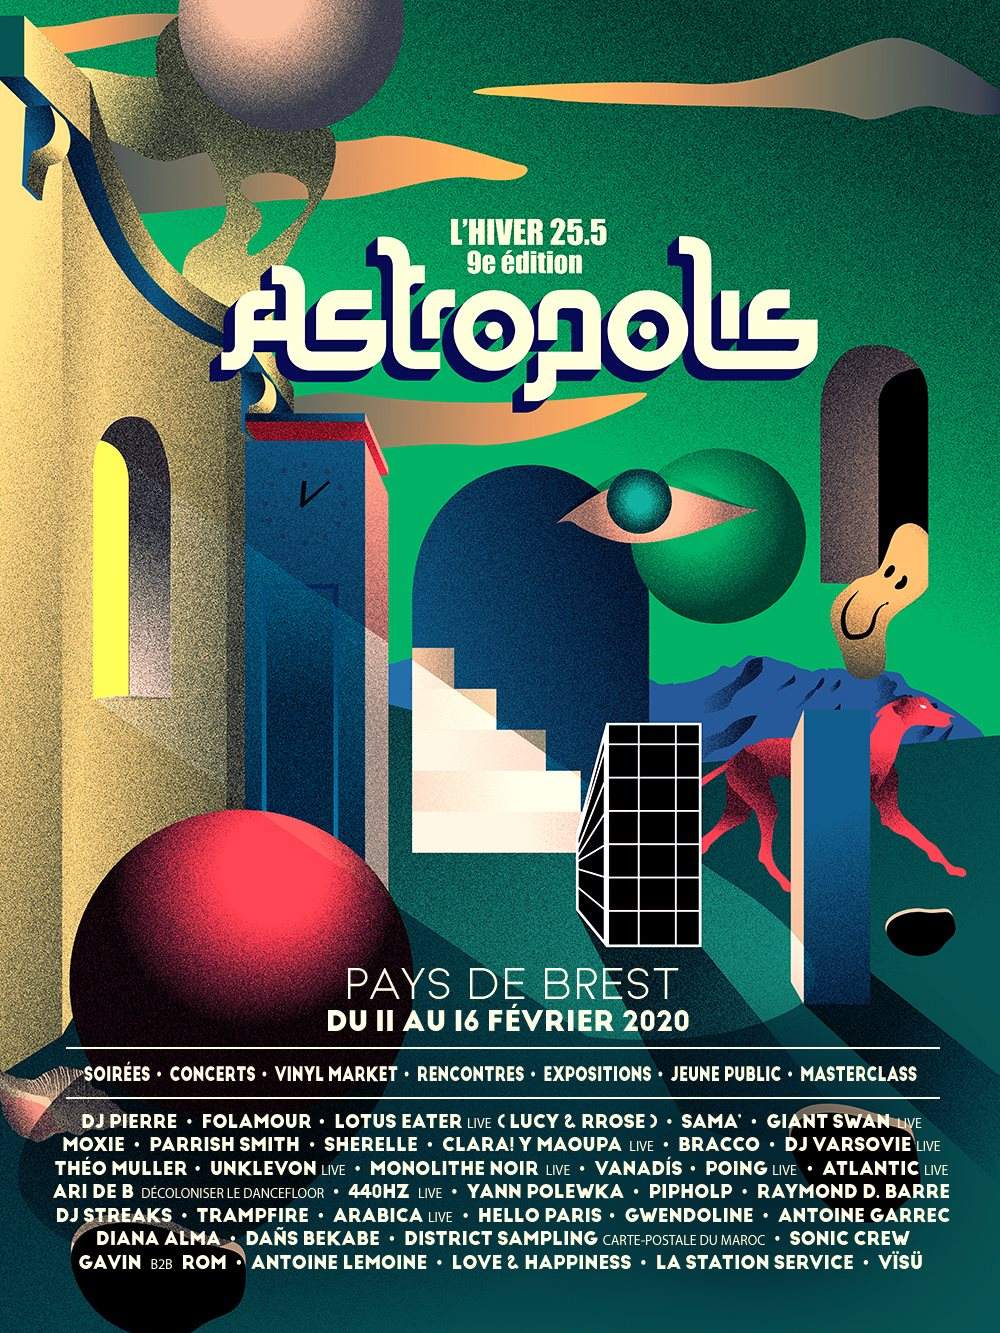 Astropolis L'hiver 2020 - フライヤー表